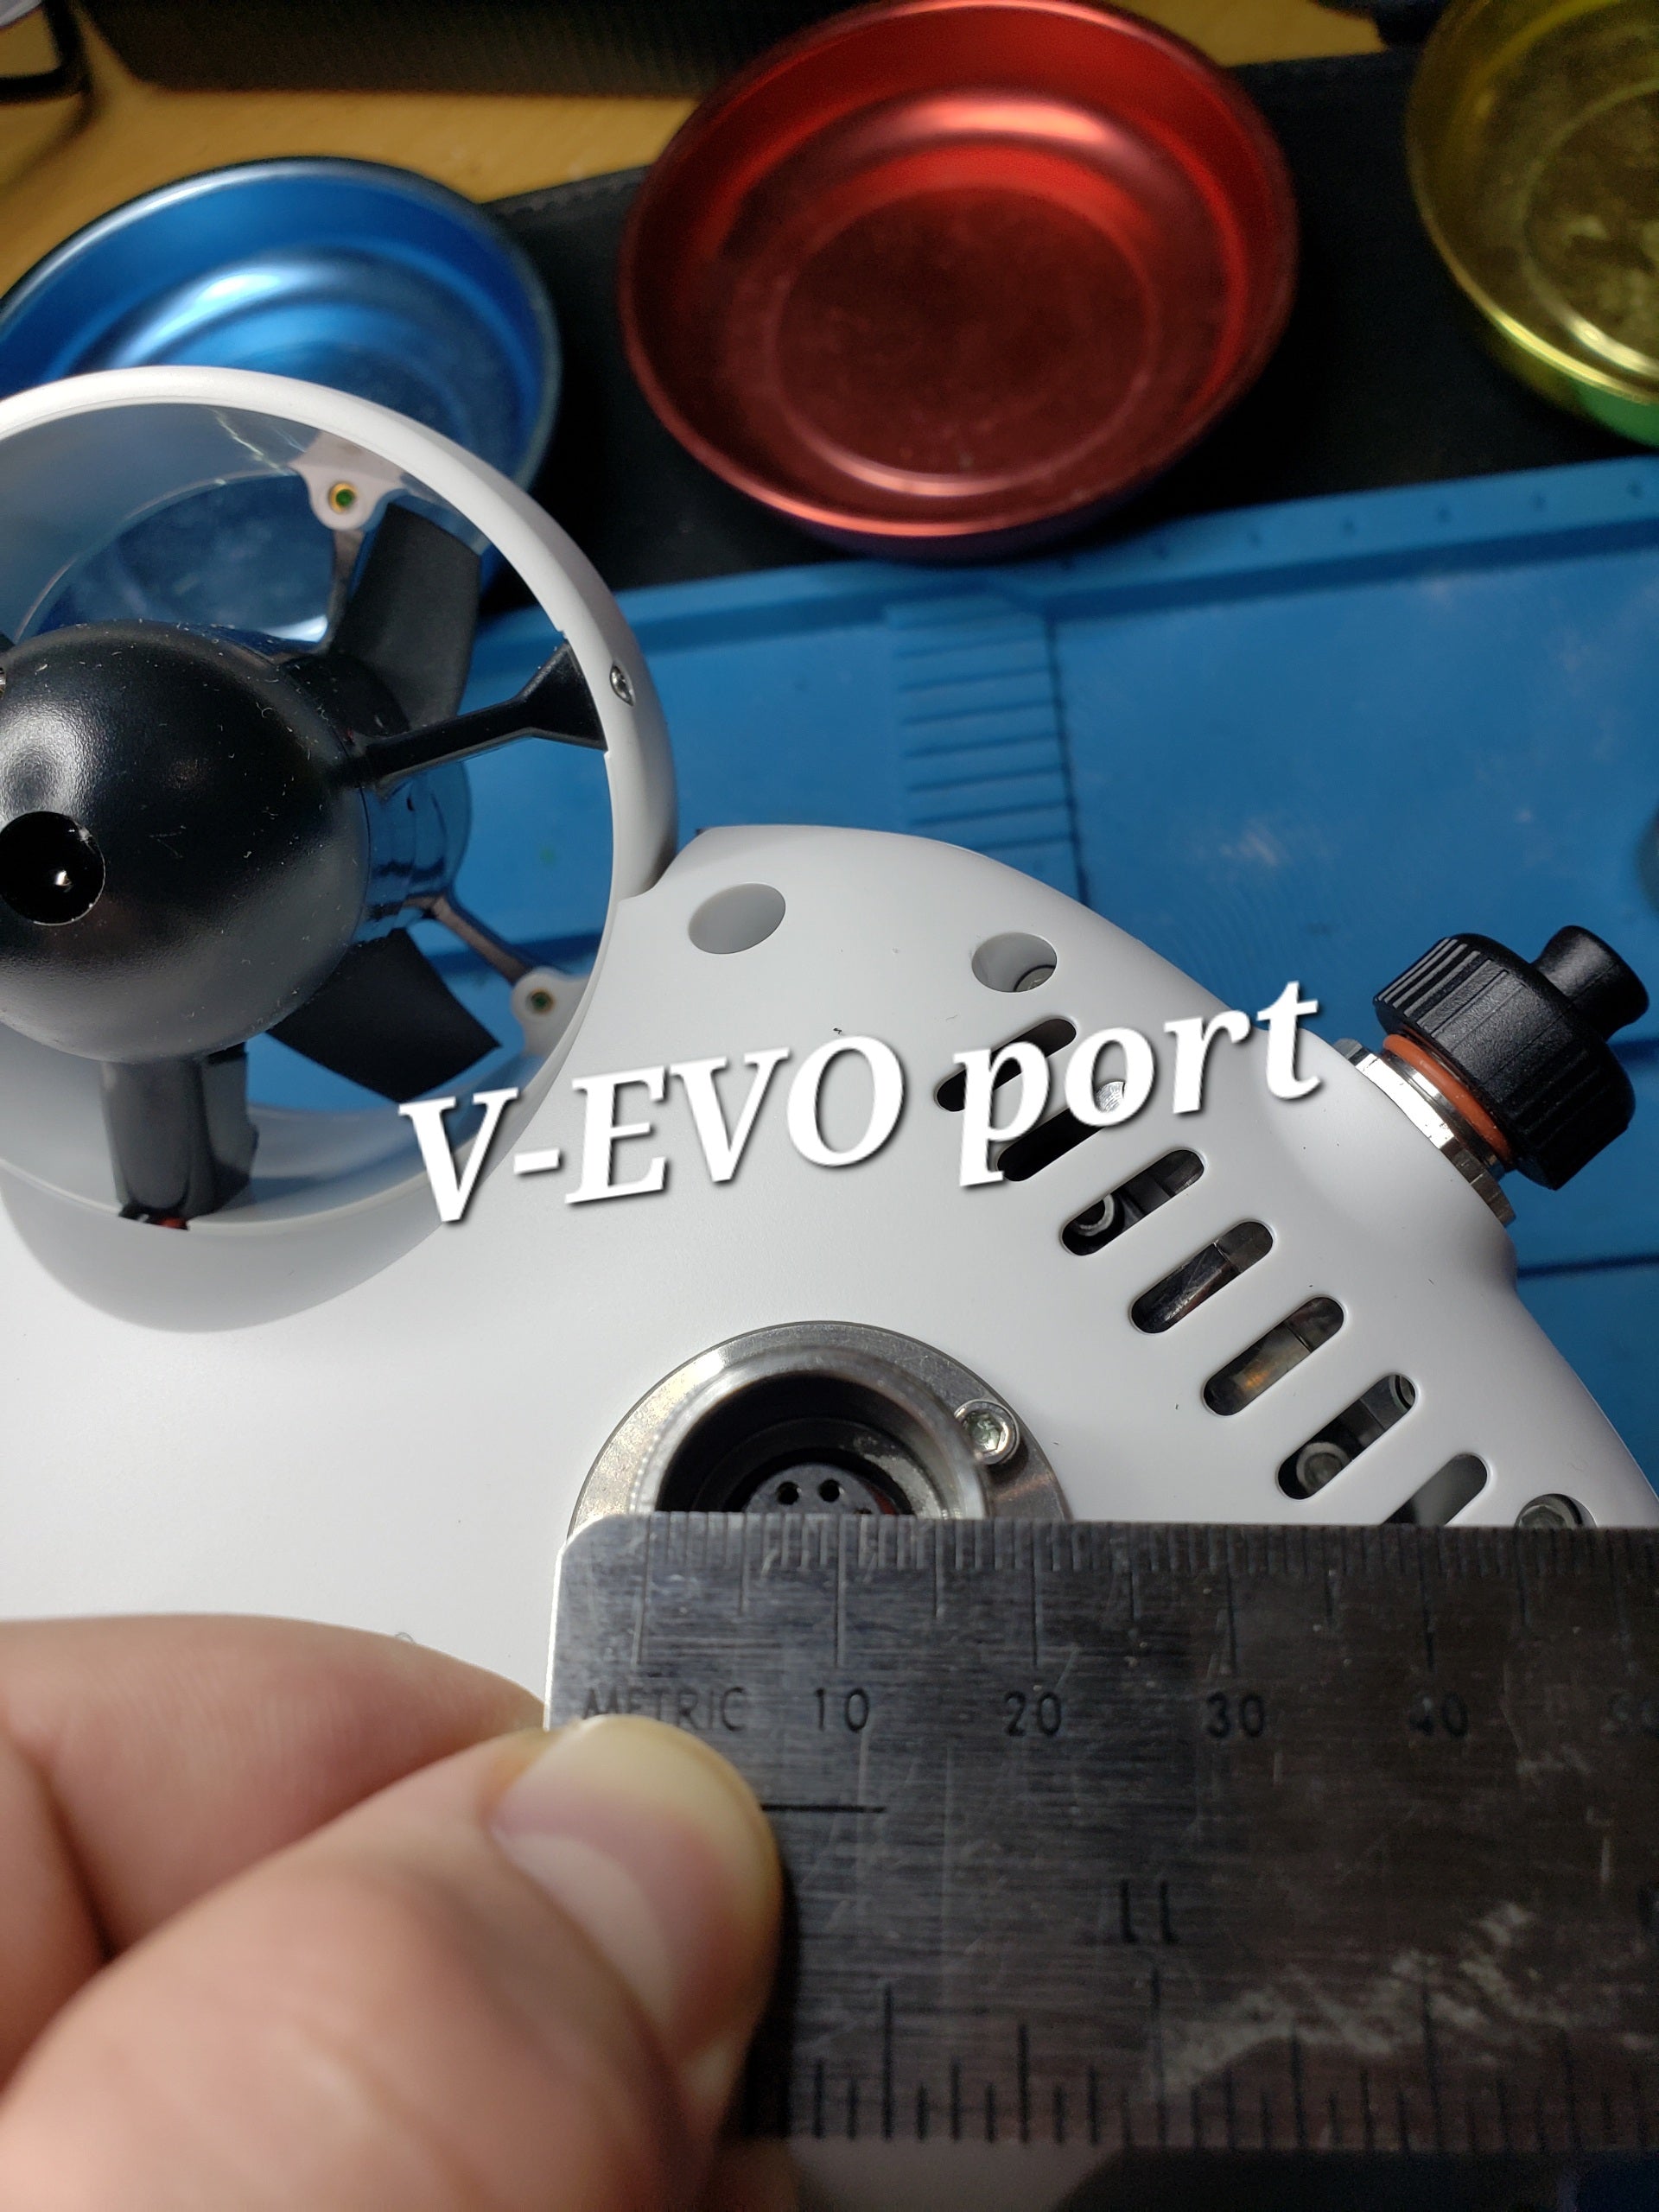 Qysea - Fifish V-EVO Robotic Arm Module